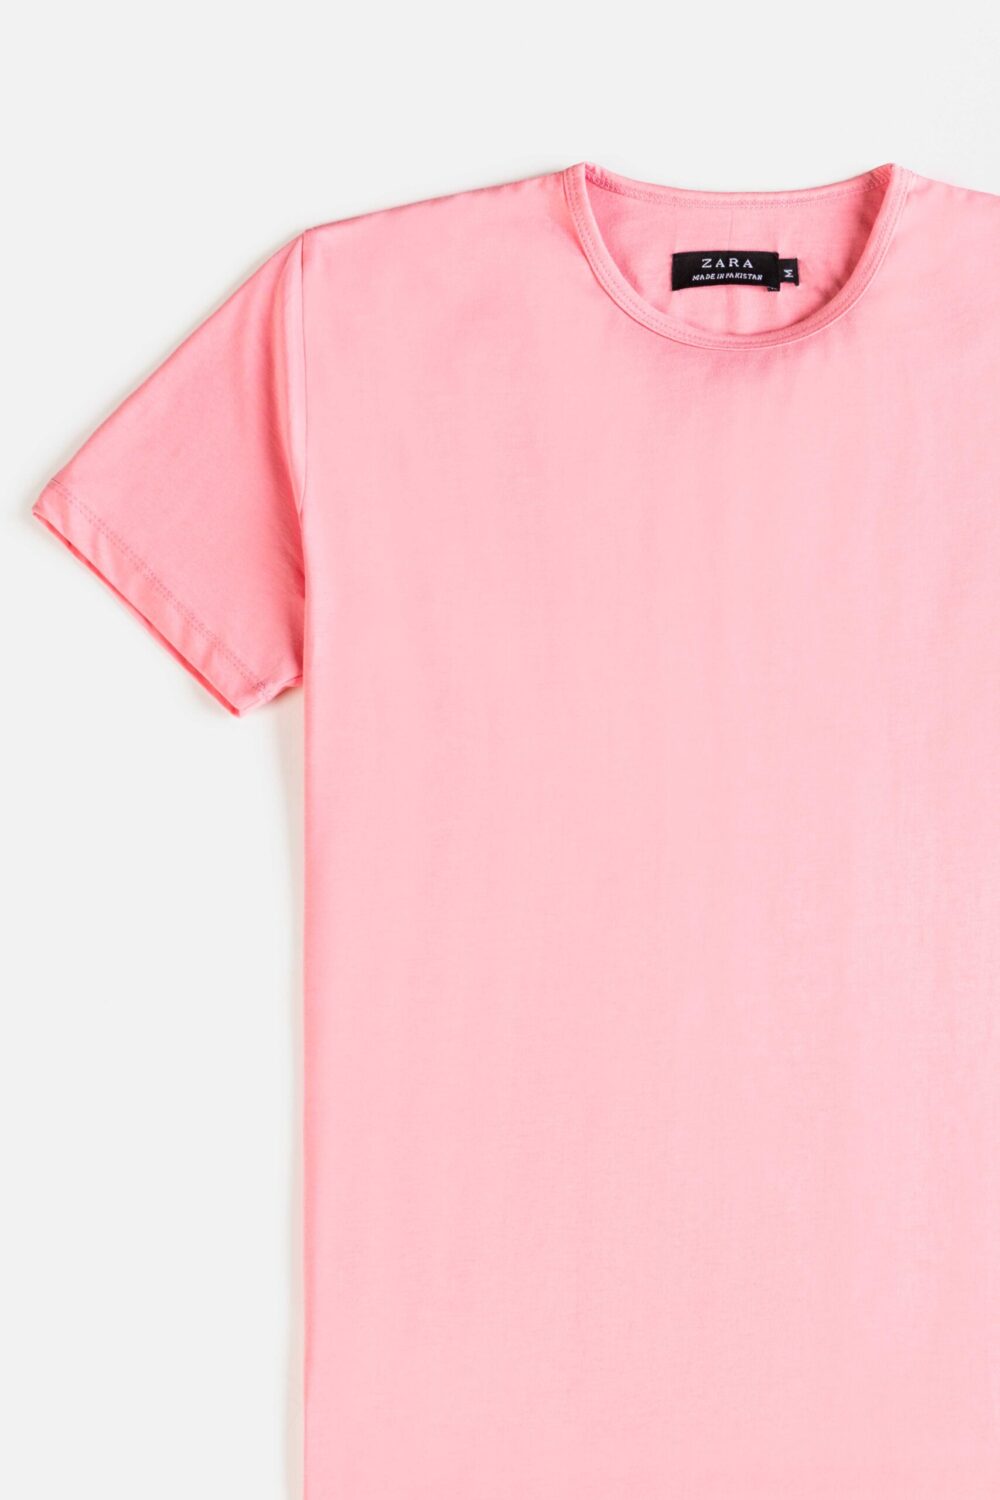 ZR Woman Cotton T Shirt – Flamingo